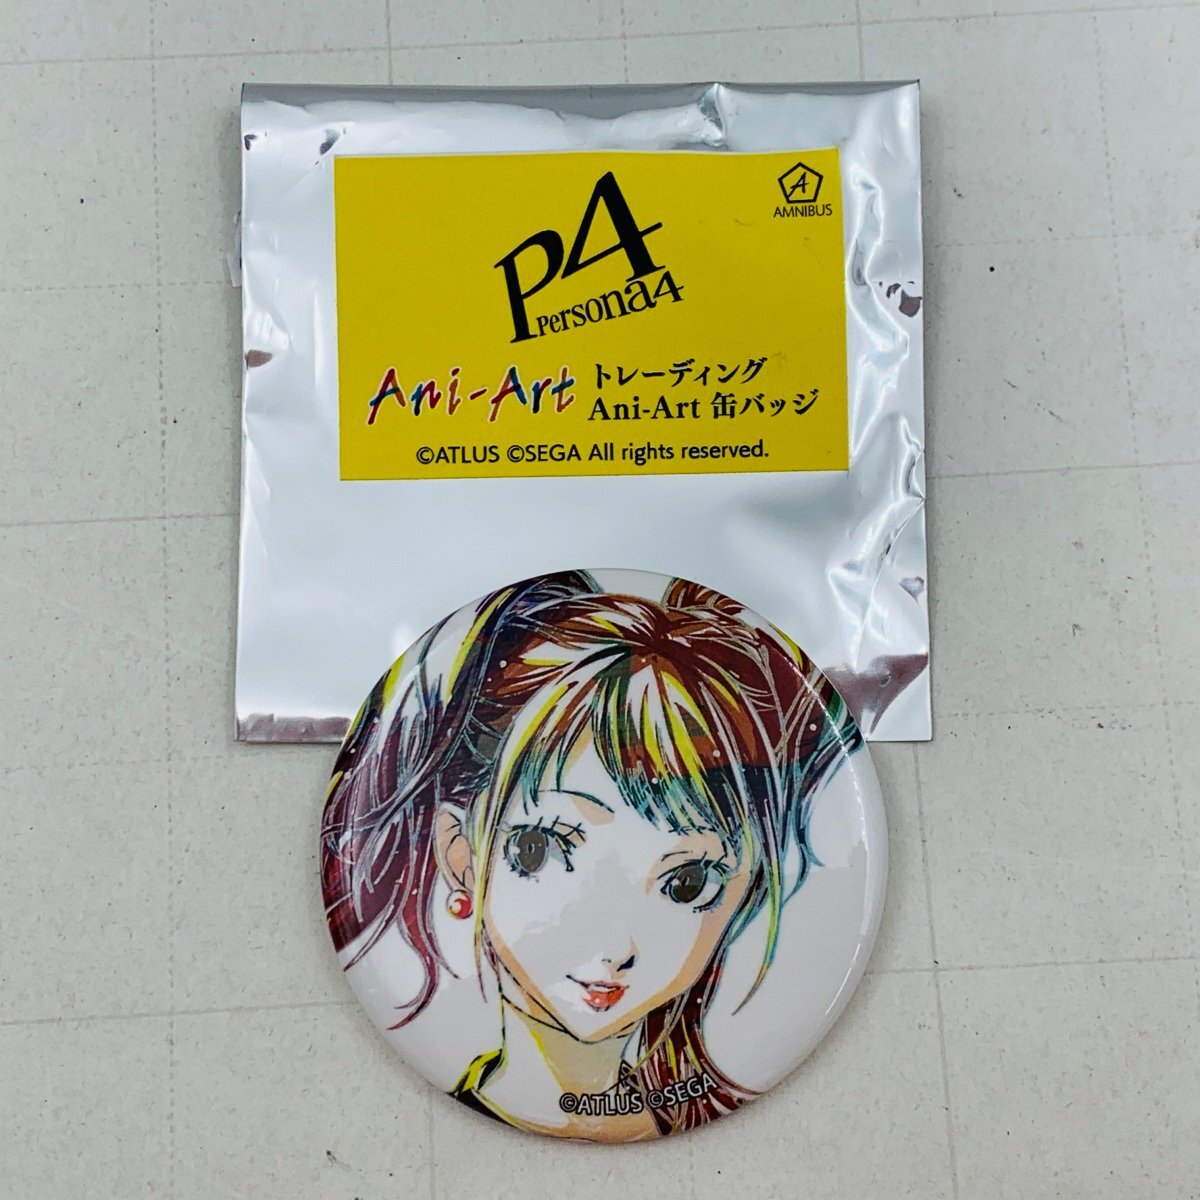  б/у товар Persona 4 PERSONA4 Ani-Art жестяная банка значок .. река ..